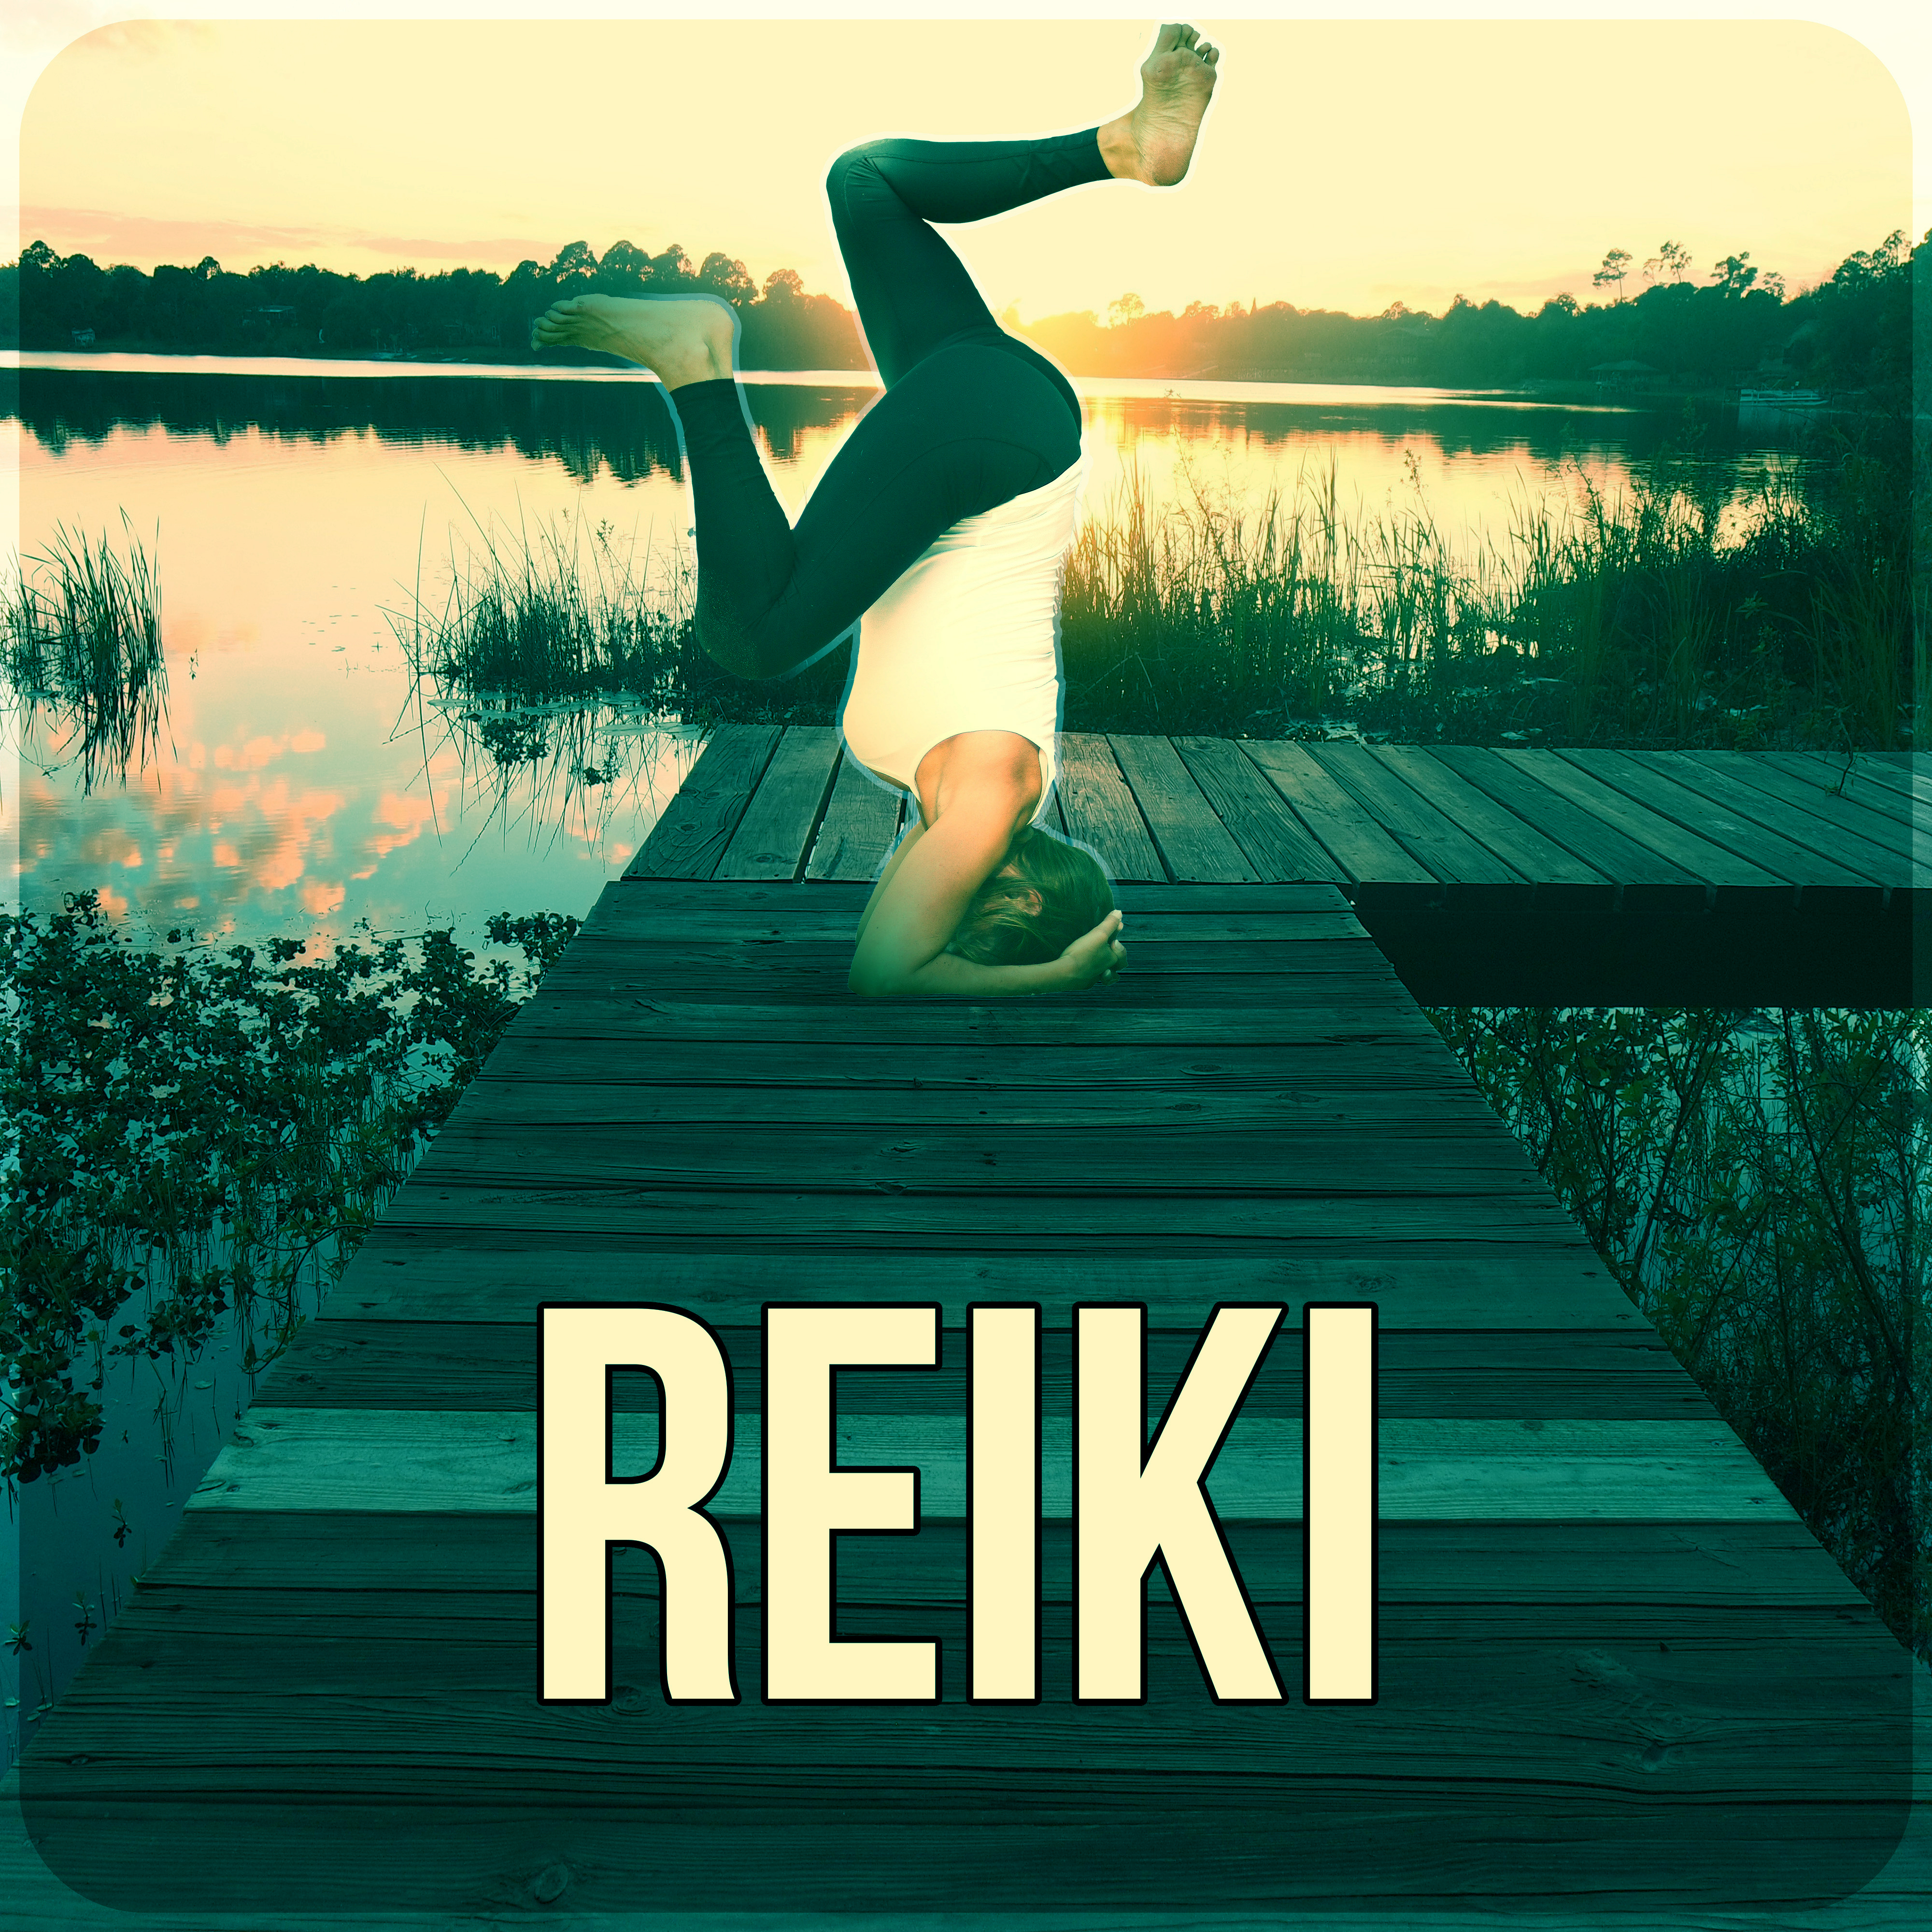 Reiki – Basic Transcendental Meditation for Beginners with Nature Sounds, Ocean Sounds for Yoga Class & Mindfulness Meditation, Zen, Reiki, Sleep